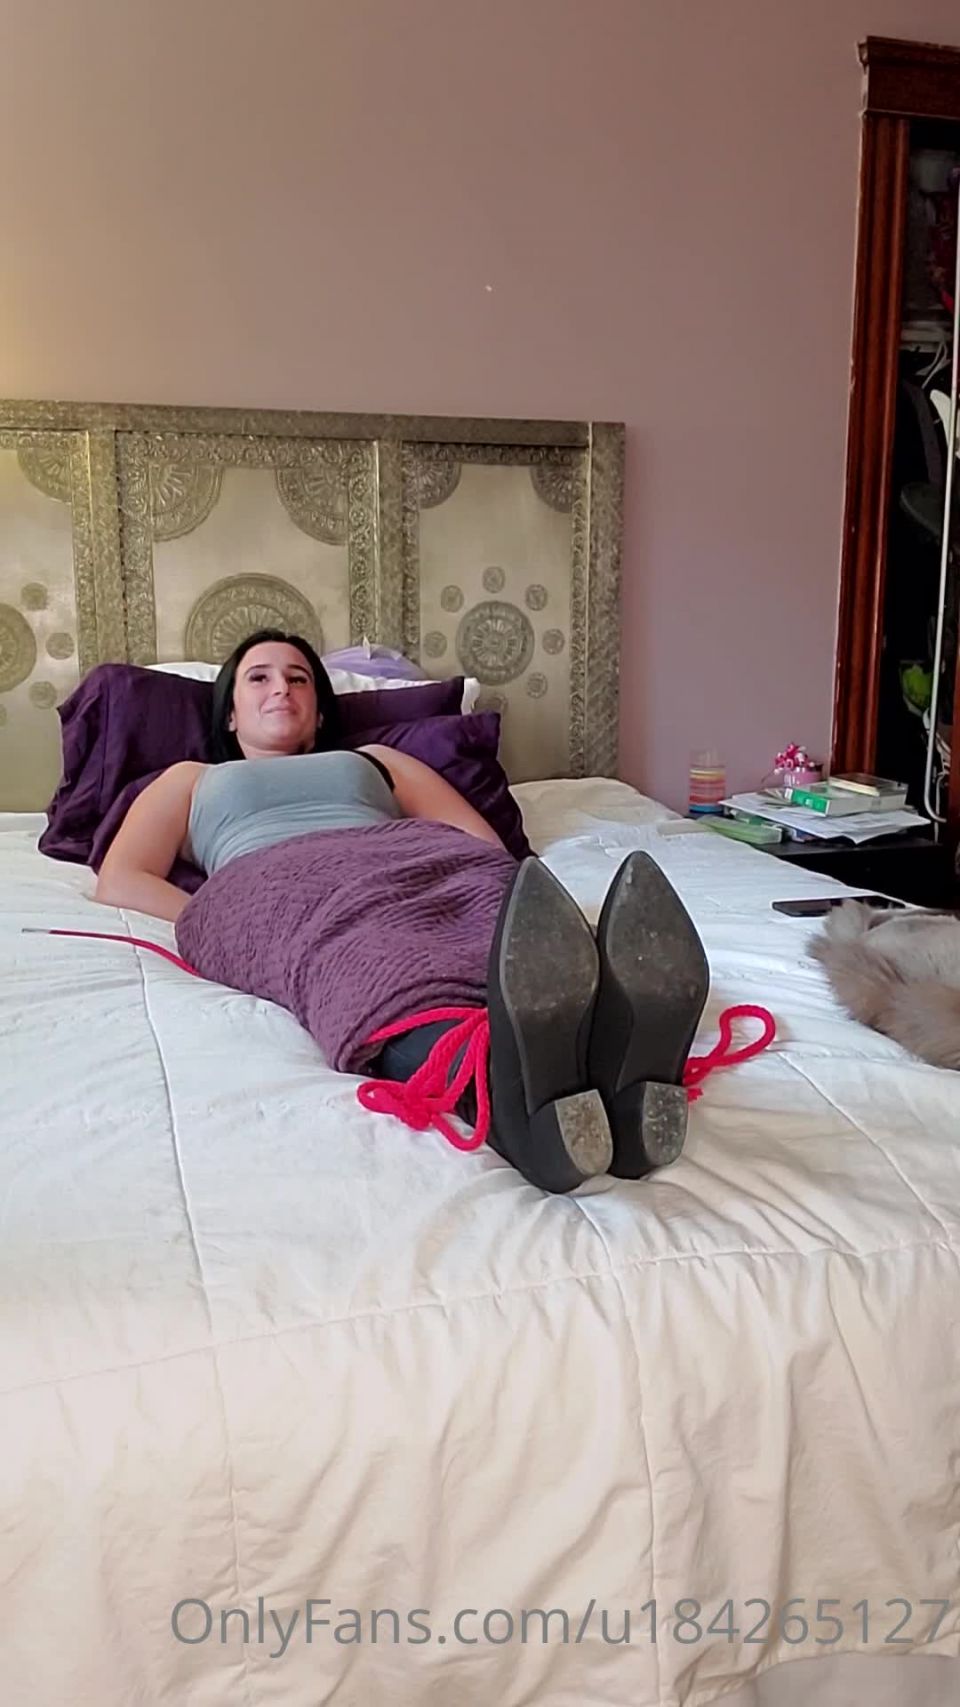 adult video 1 diamond jackson foot fetish TickleMeAmy – Spy Tickle, vip clips on feet porn